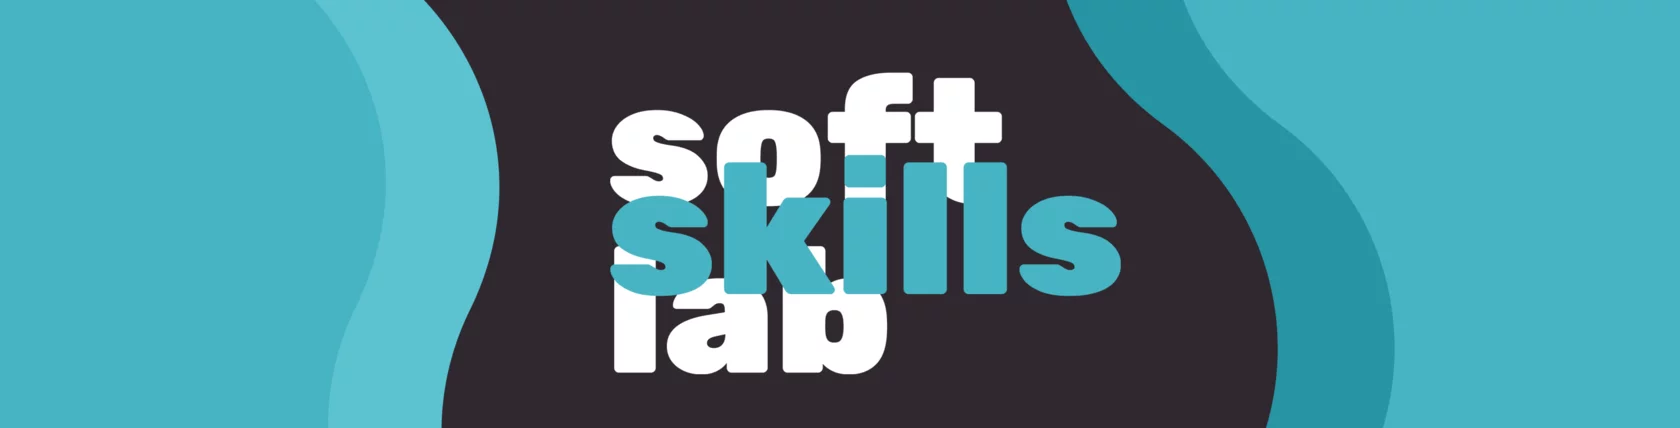 Soft Skills Lab